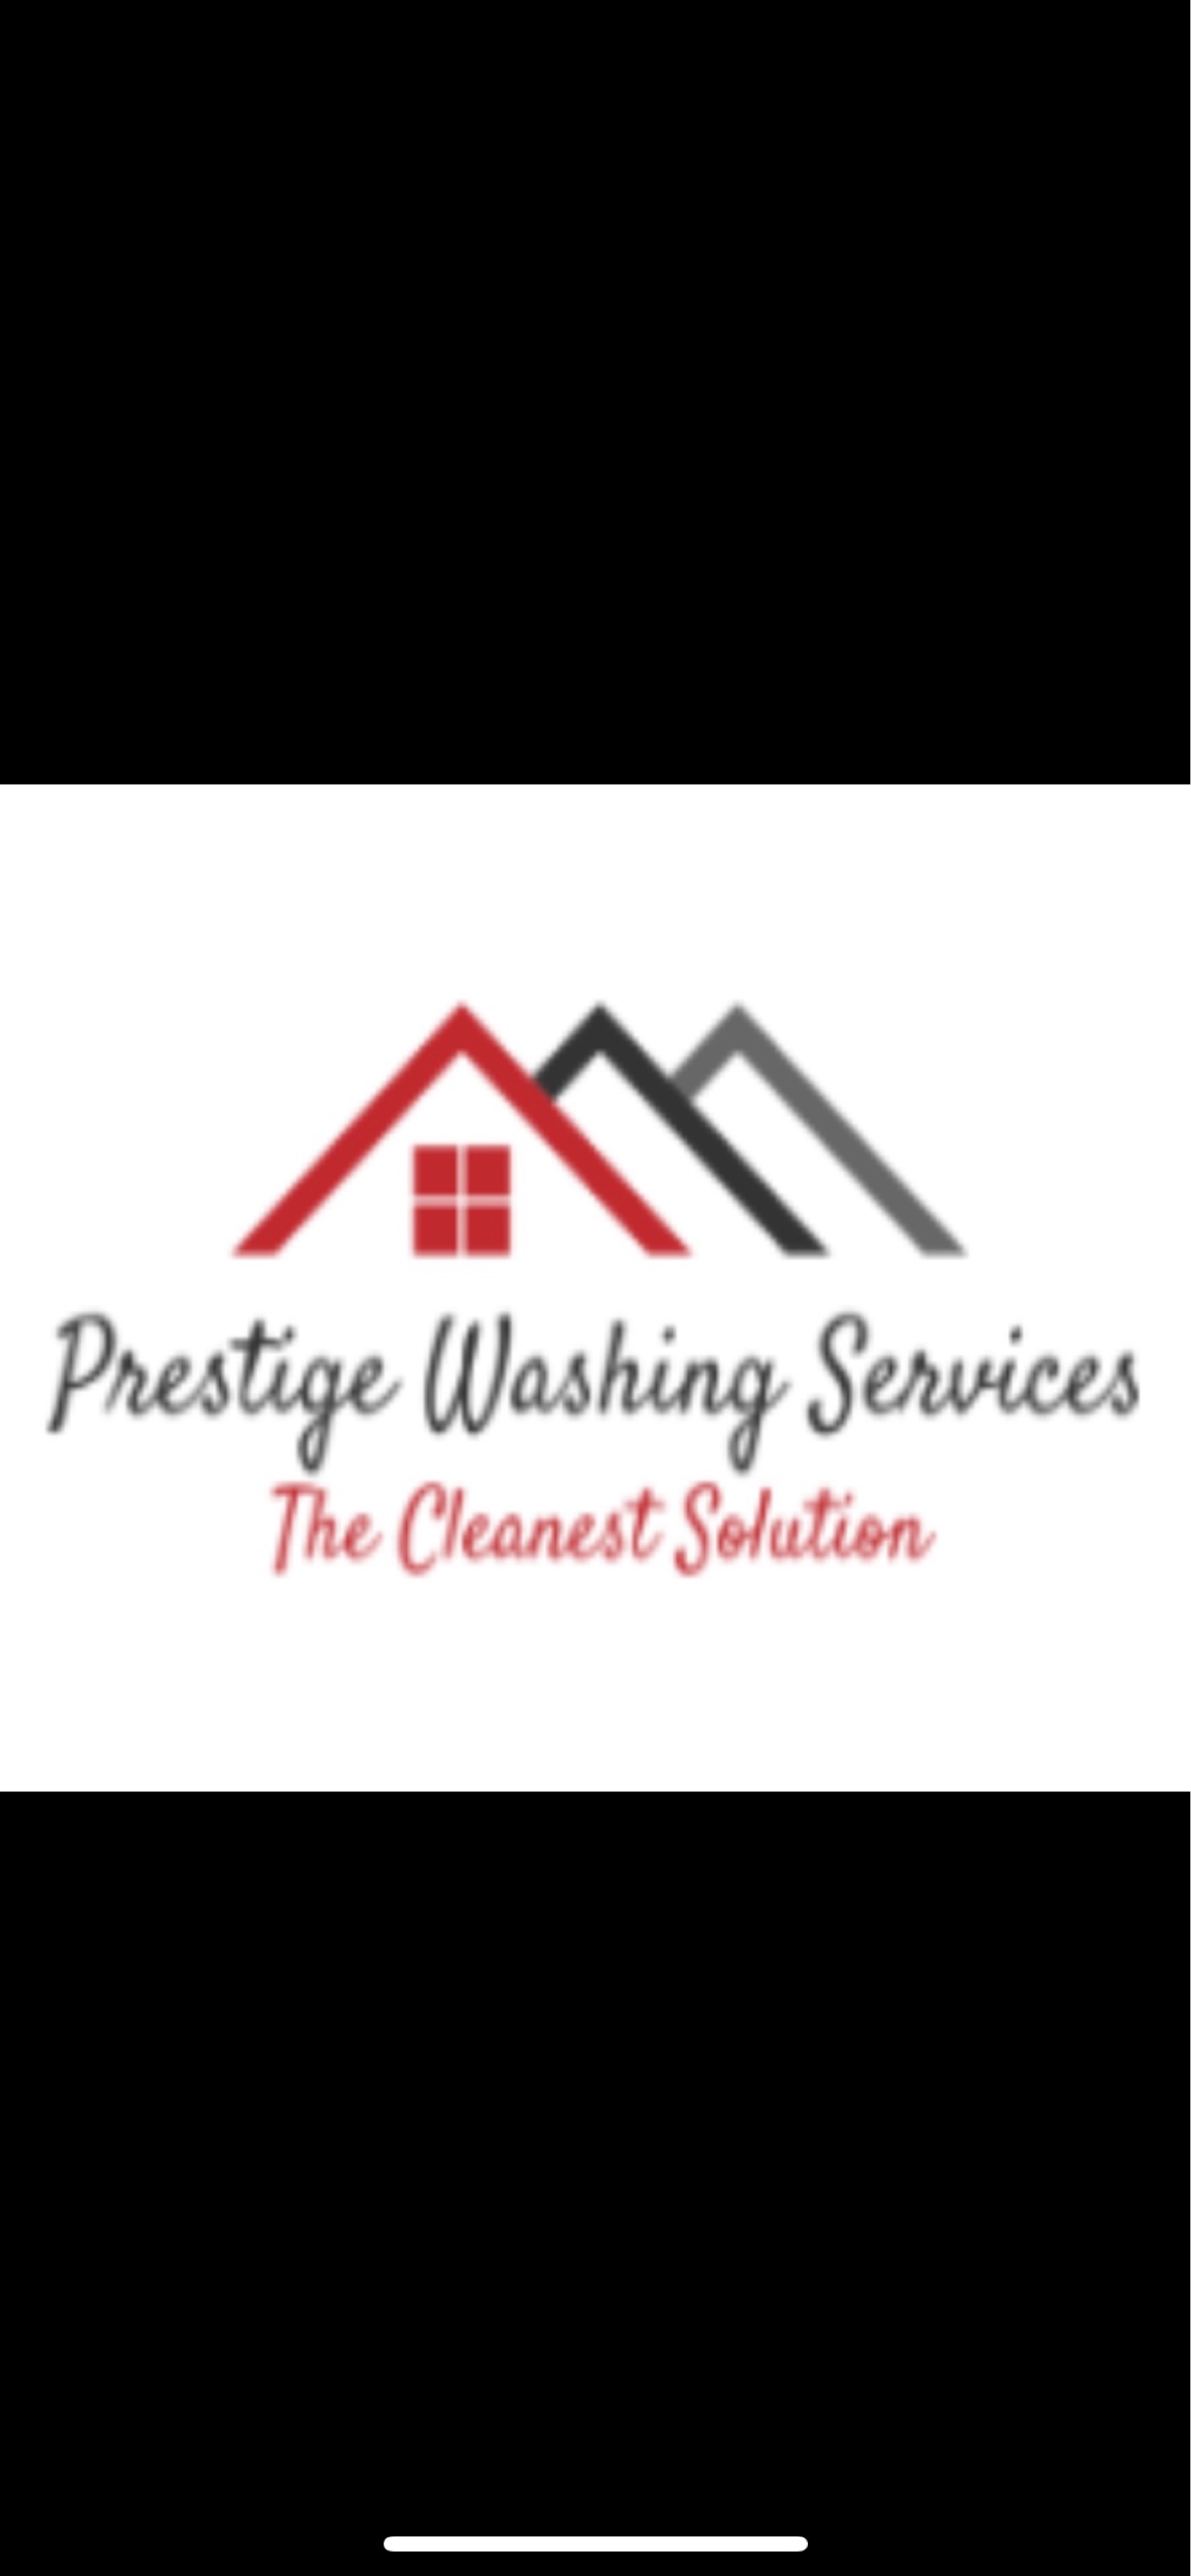 Prestige Washing Services Logo